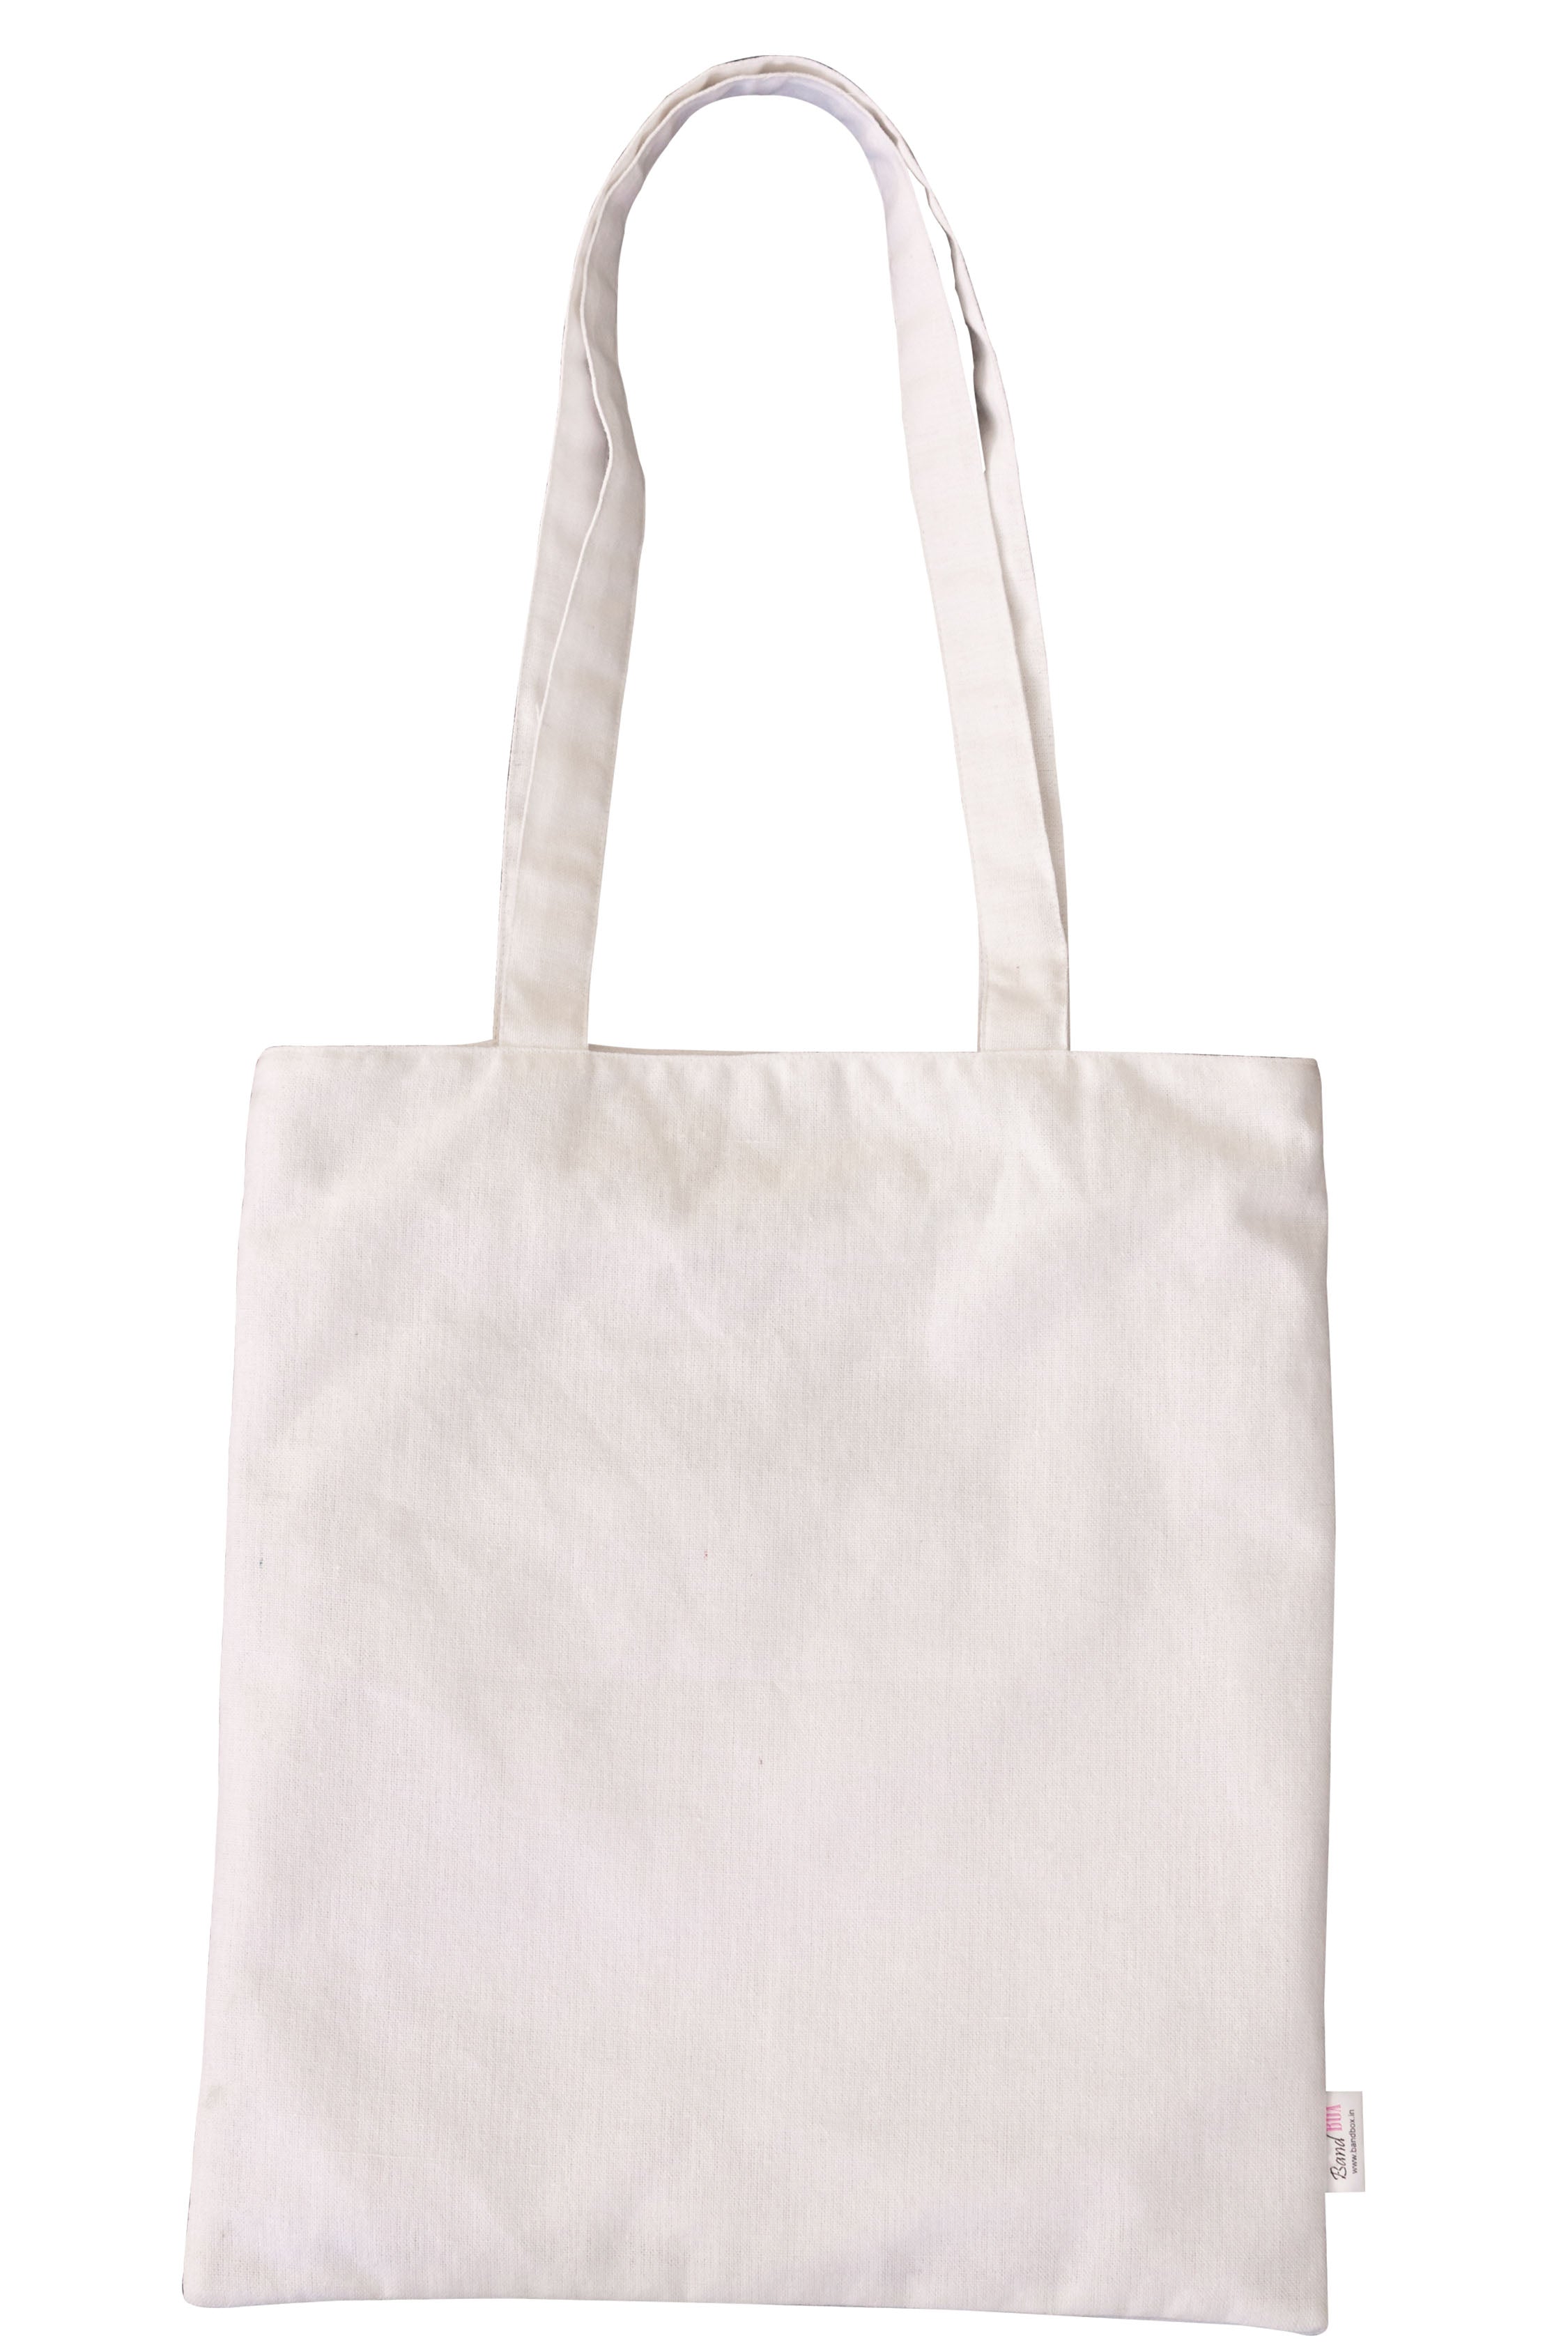 Say No To Plastic Cotton Tote Bag